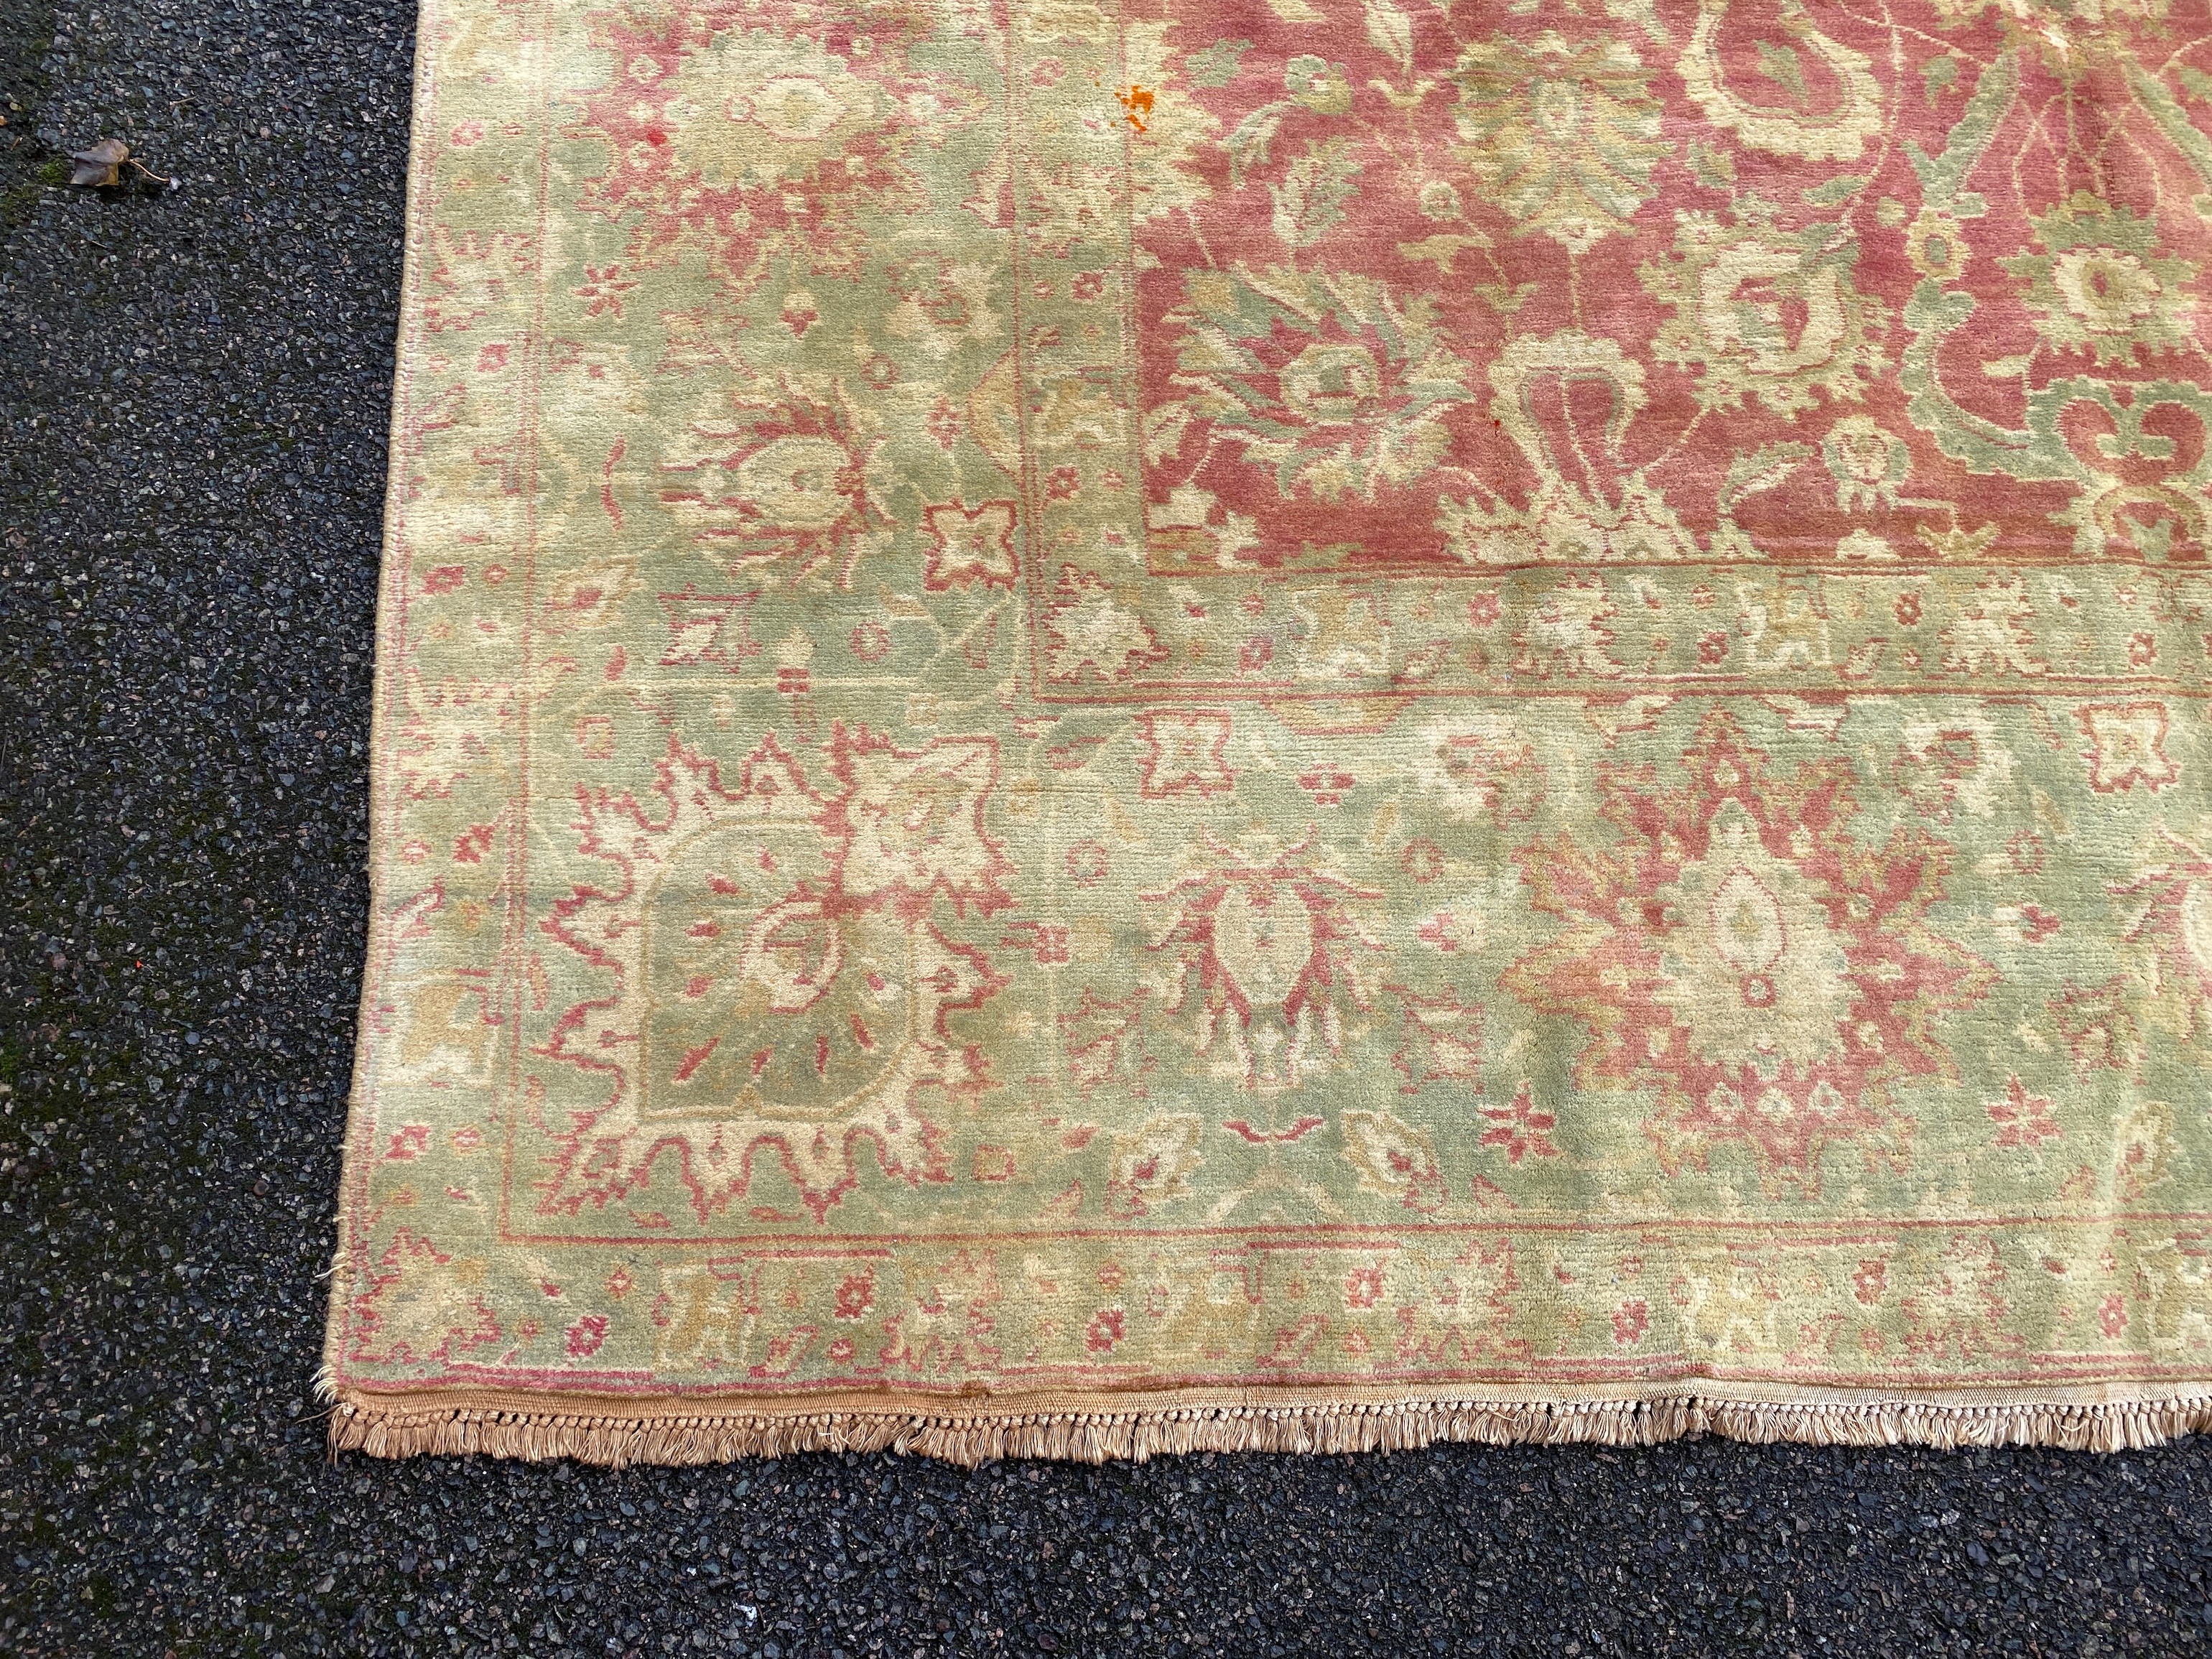 An Indian Agra carpet, 358 x 261cm